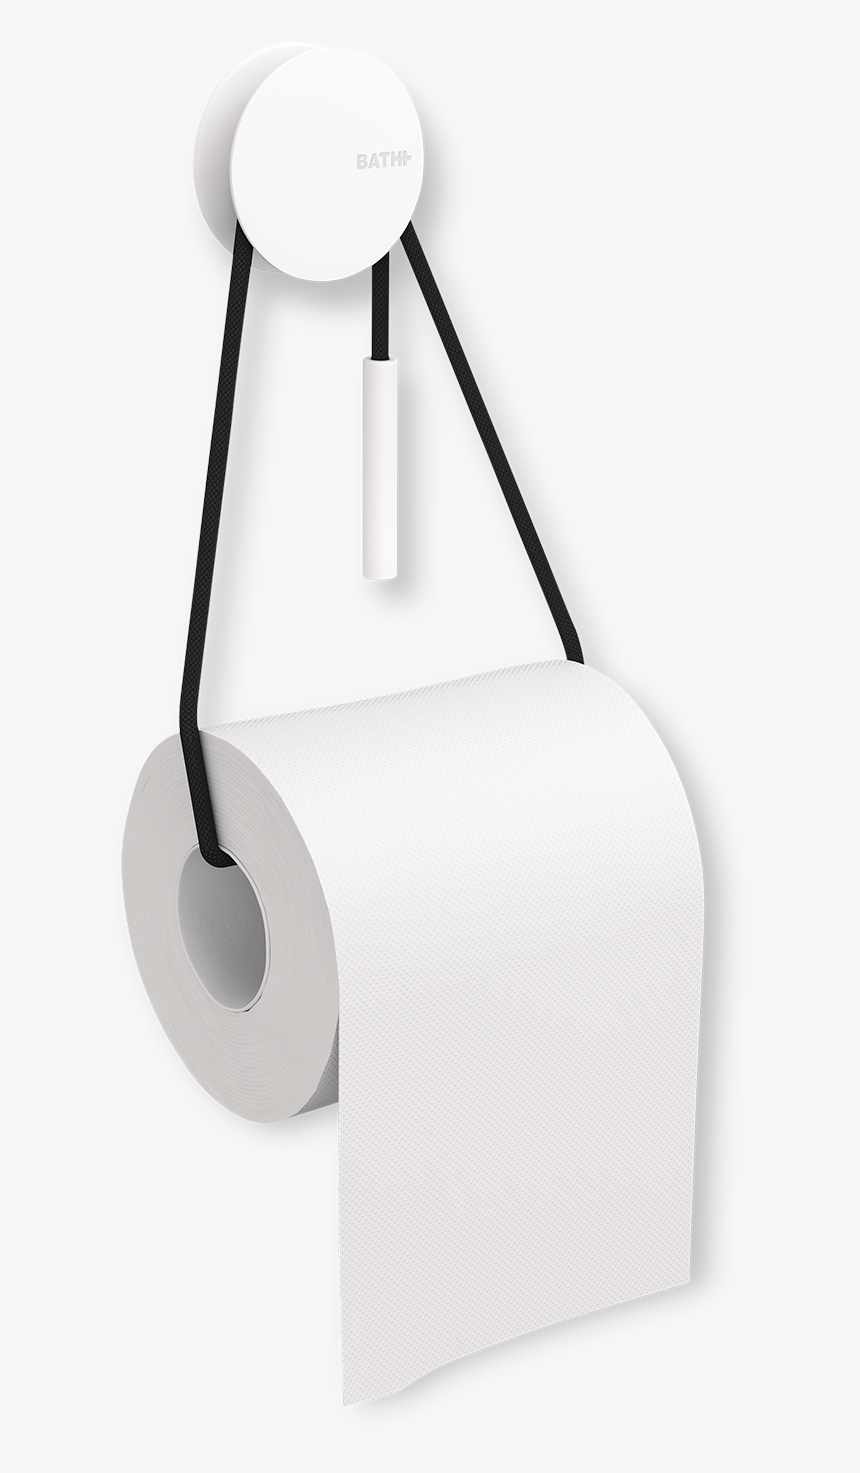 Diabolo Toilet Paper Holder, White-0 - Diabolo Toilet Paper Holder, HD Png Download, Free Download